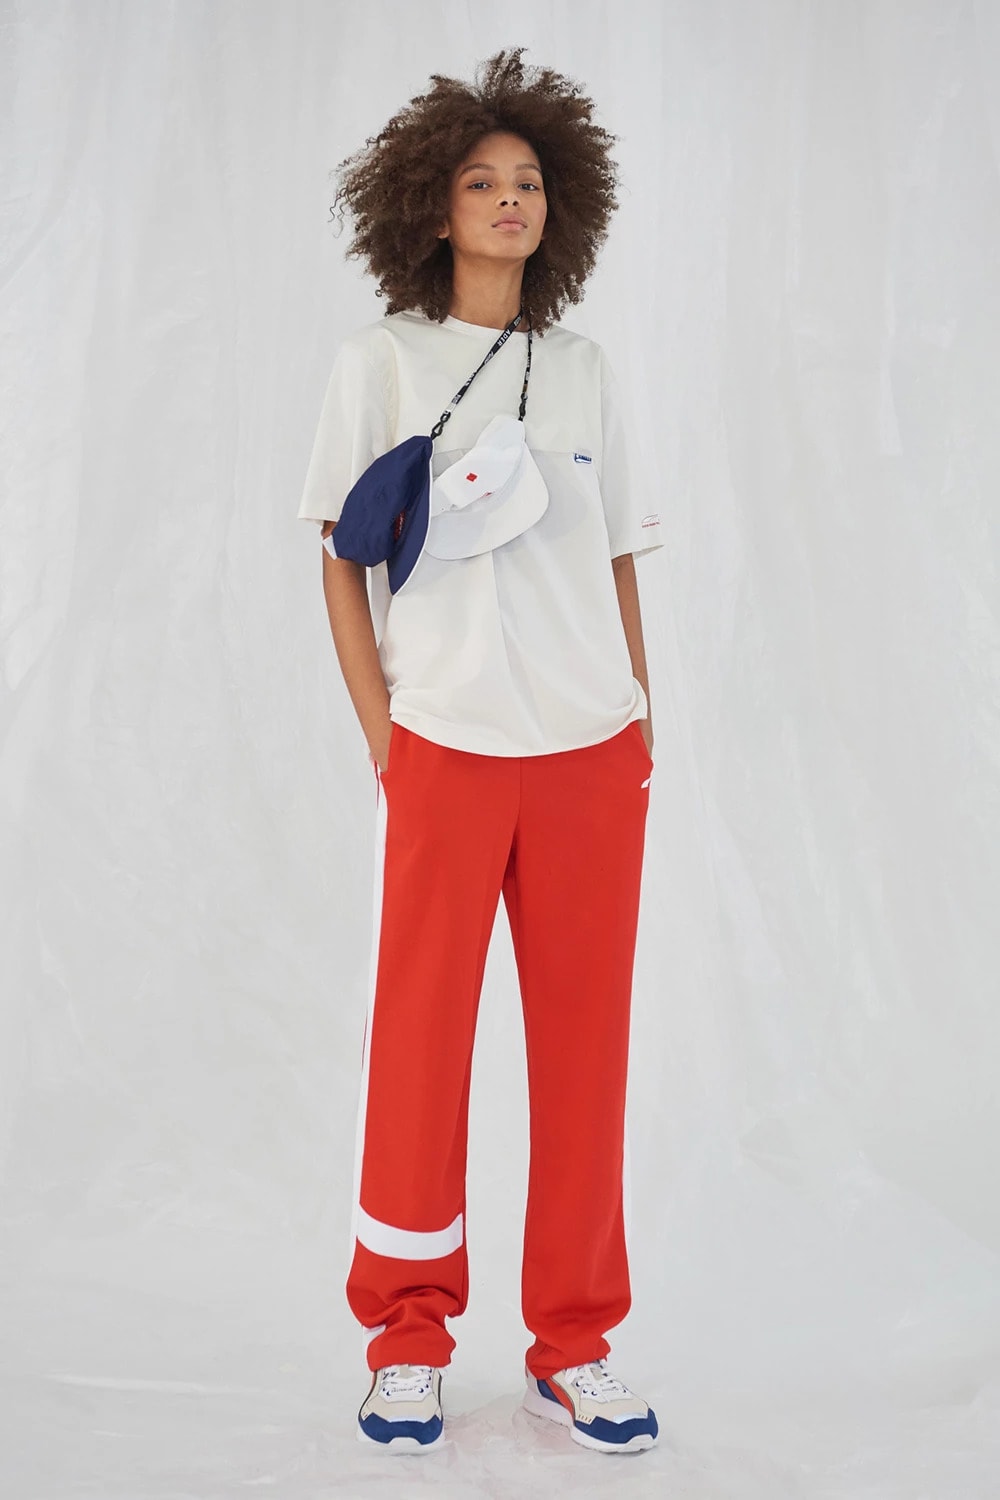 Ader Error x PUMA Spring Summer 2019 Lookbook Shirt White Pants Red